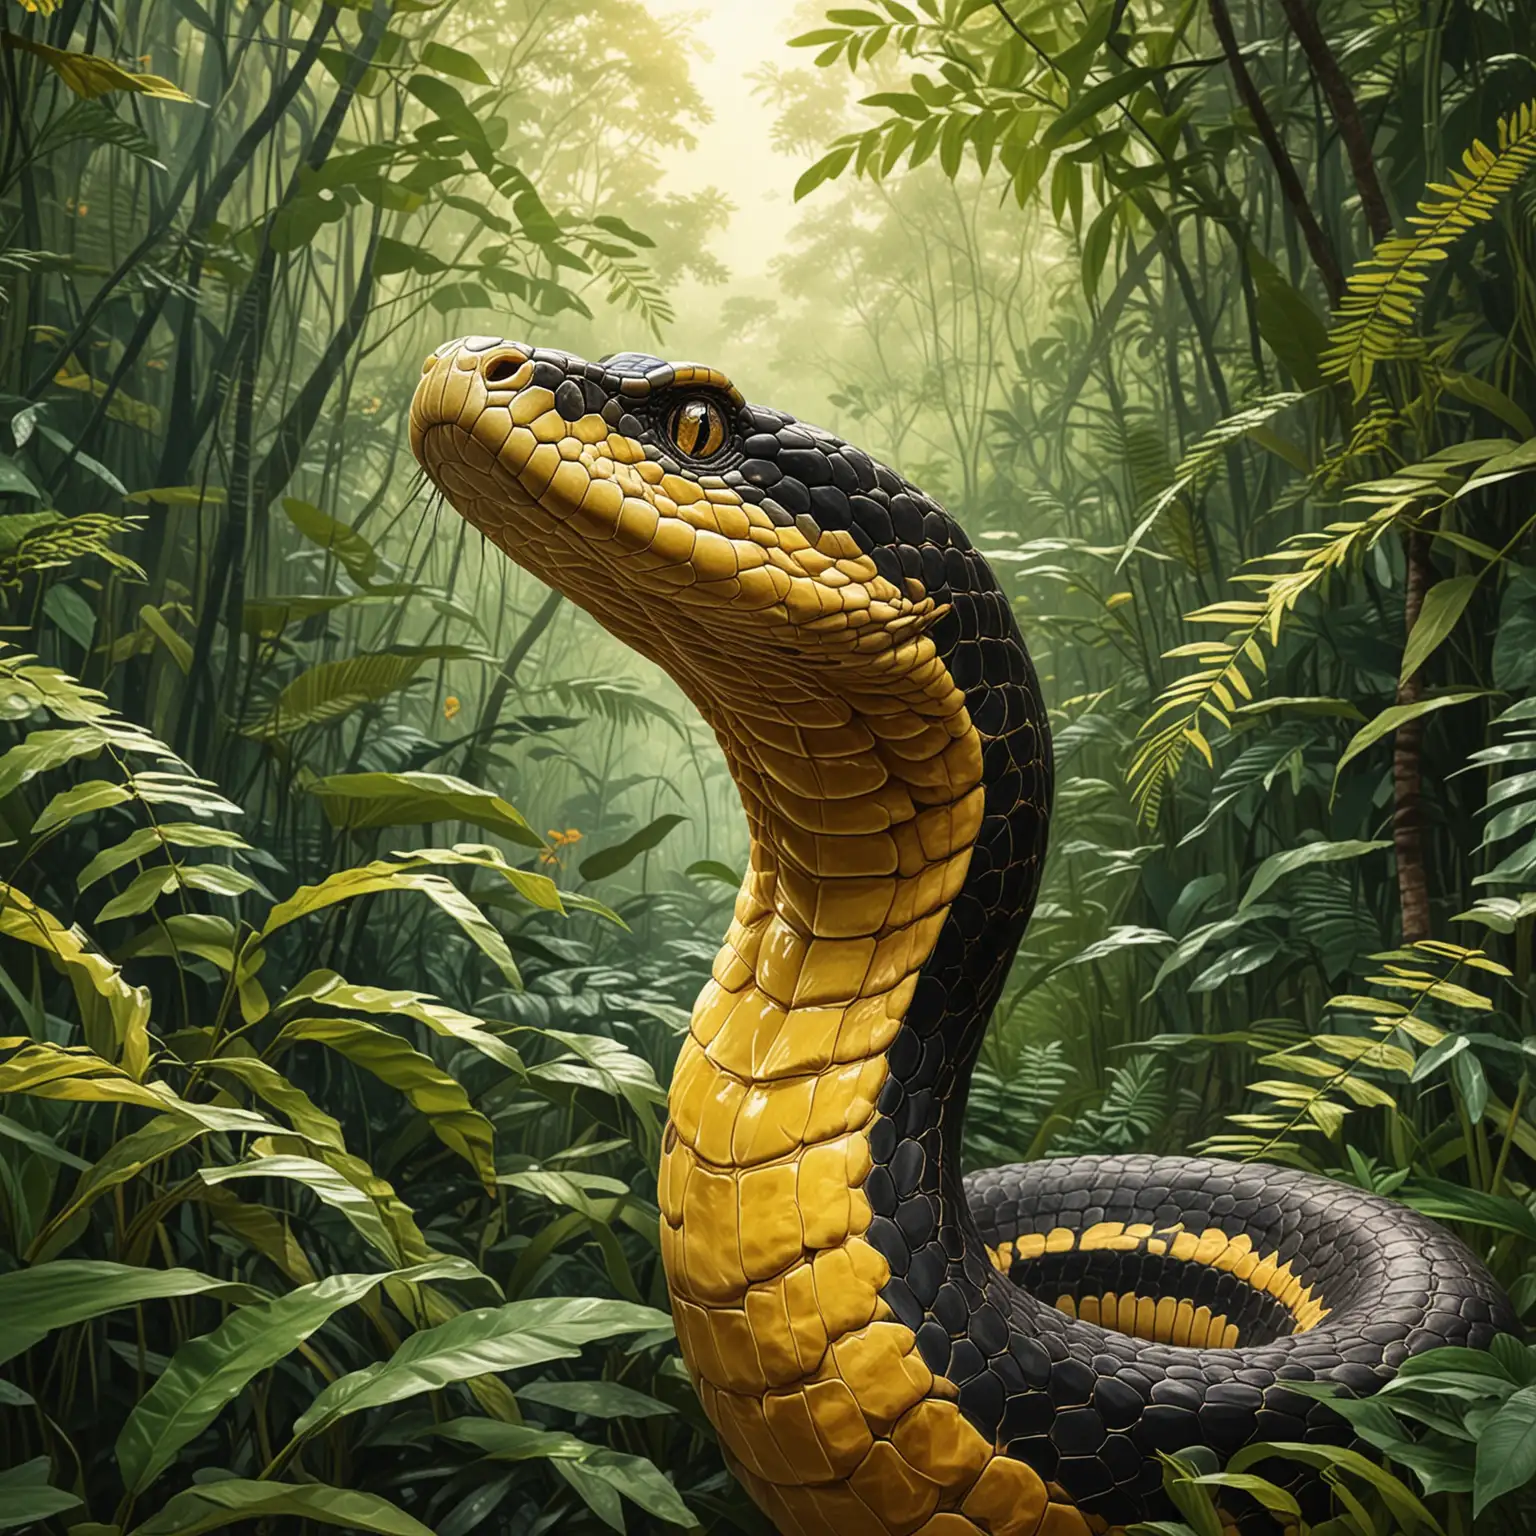 Majestic King Cobra in Lush Asian Wilderness